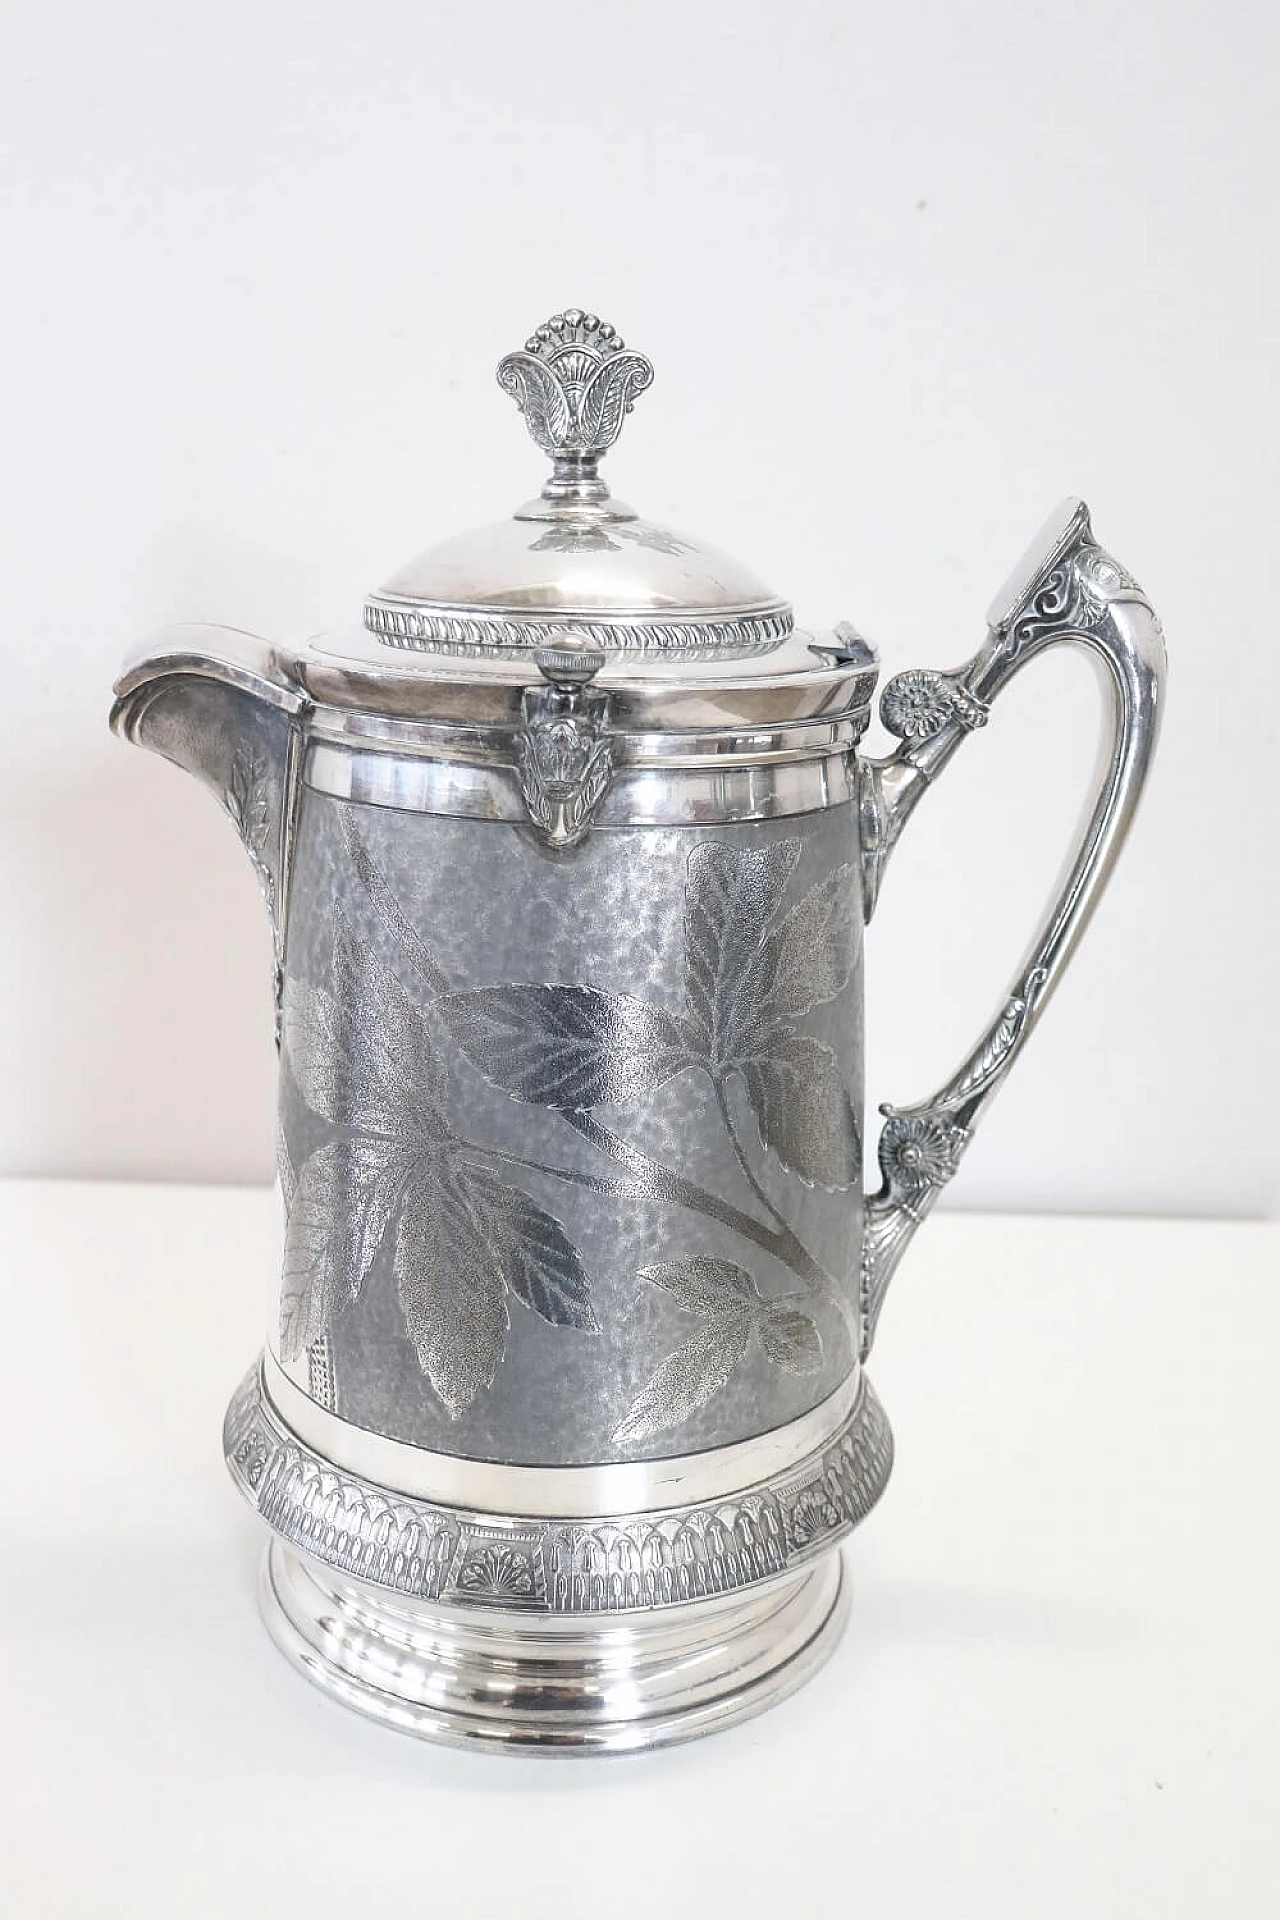 Caraffa placcata argento con marchio Reed & Barton, '800 7